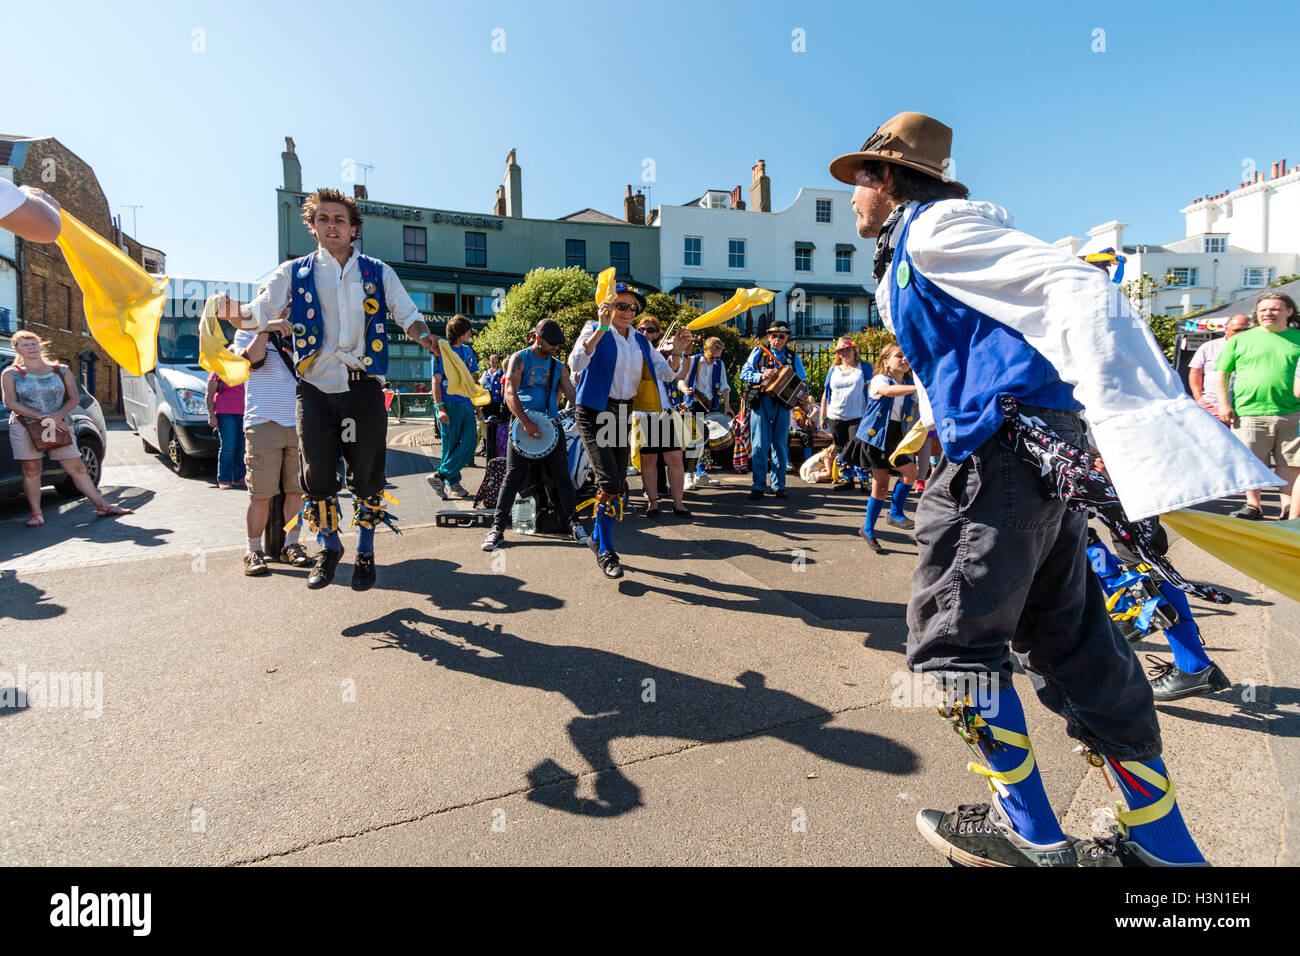 Traditional English Folk Dancers, Royal Liberty Morris, dancing on promenade and waving yellow hankies during the summertime Broadstairs Folk week. Stock Photo